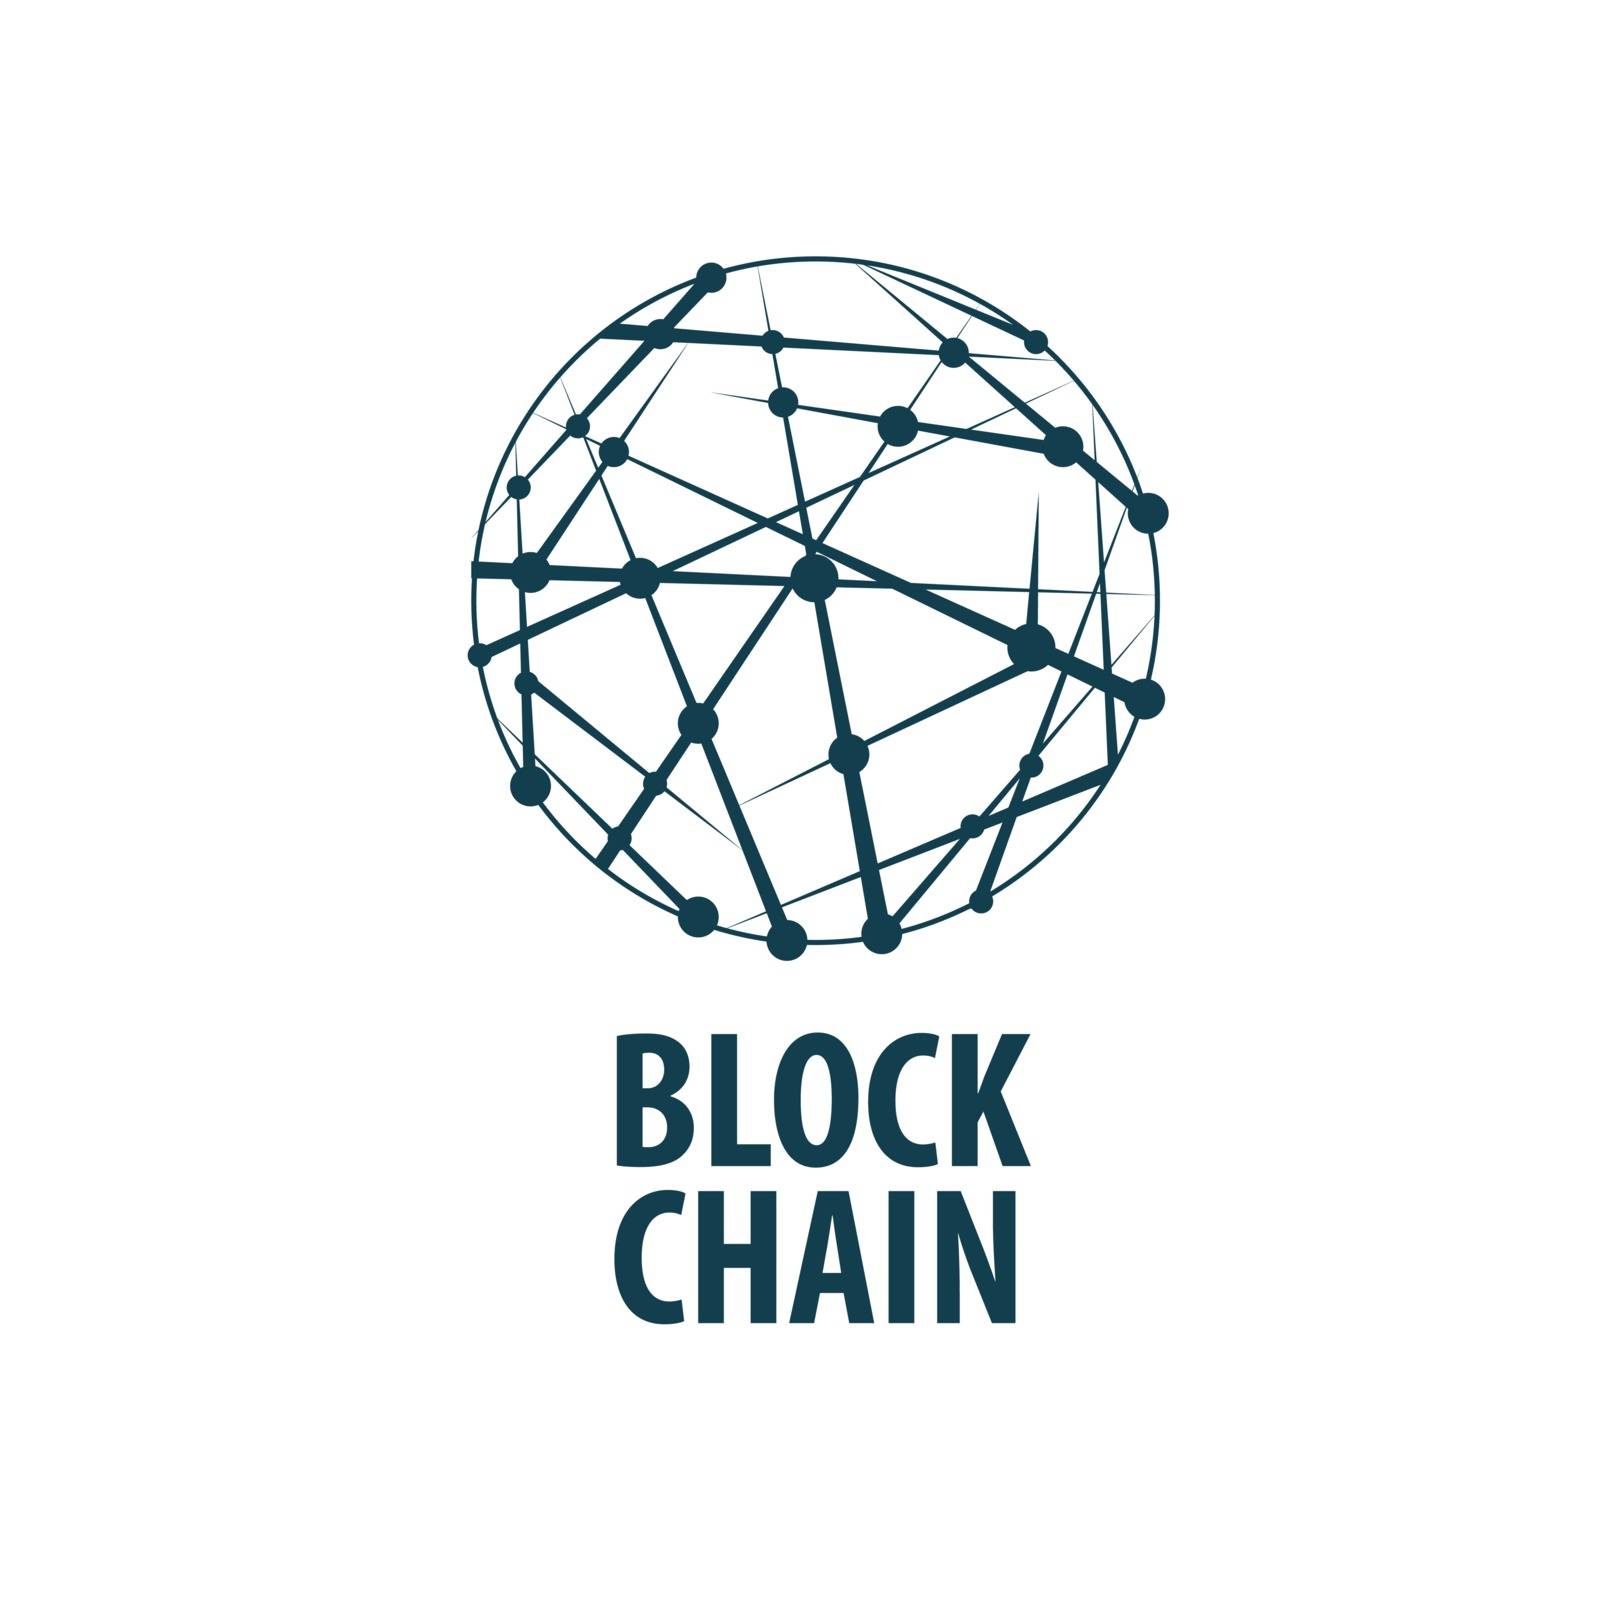 Vector logo blockchain by butenkow